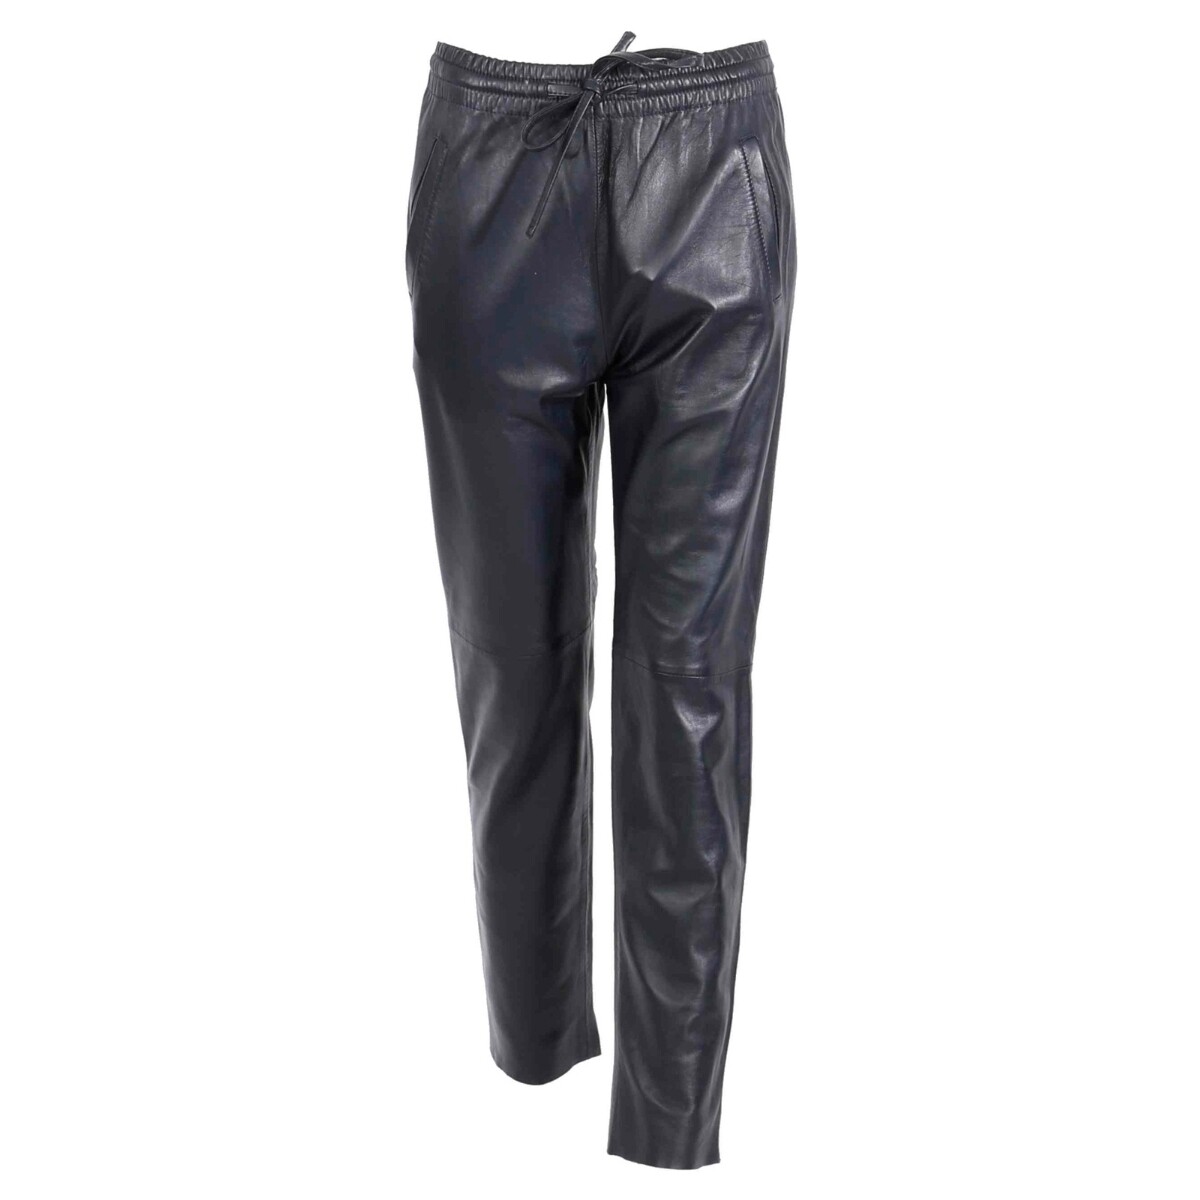 Oakwood Bleu Pantalon jogpant en cuir Gift Ref 50426 Bleu Marine 6TEVmjc2